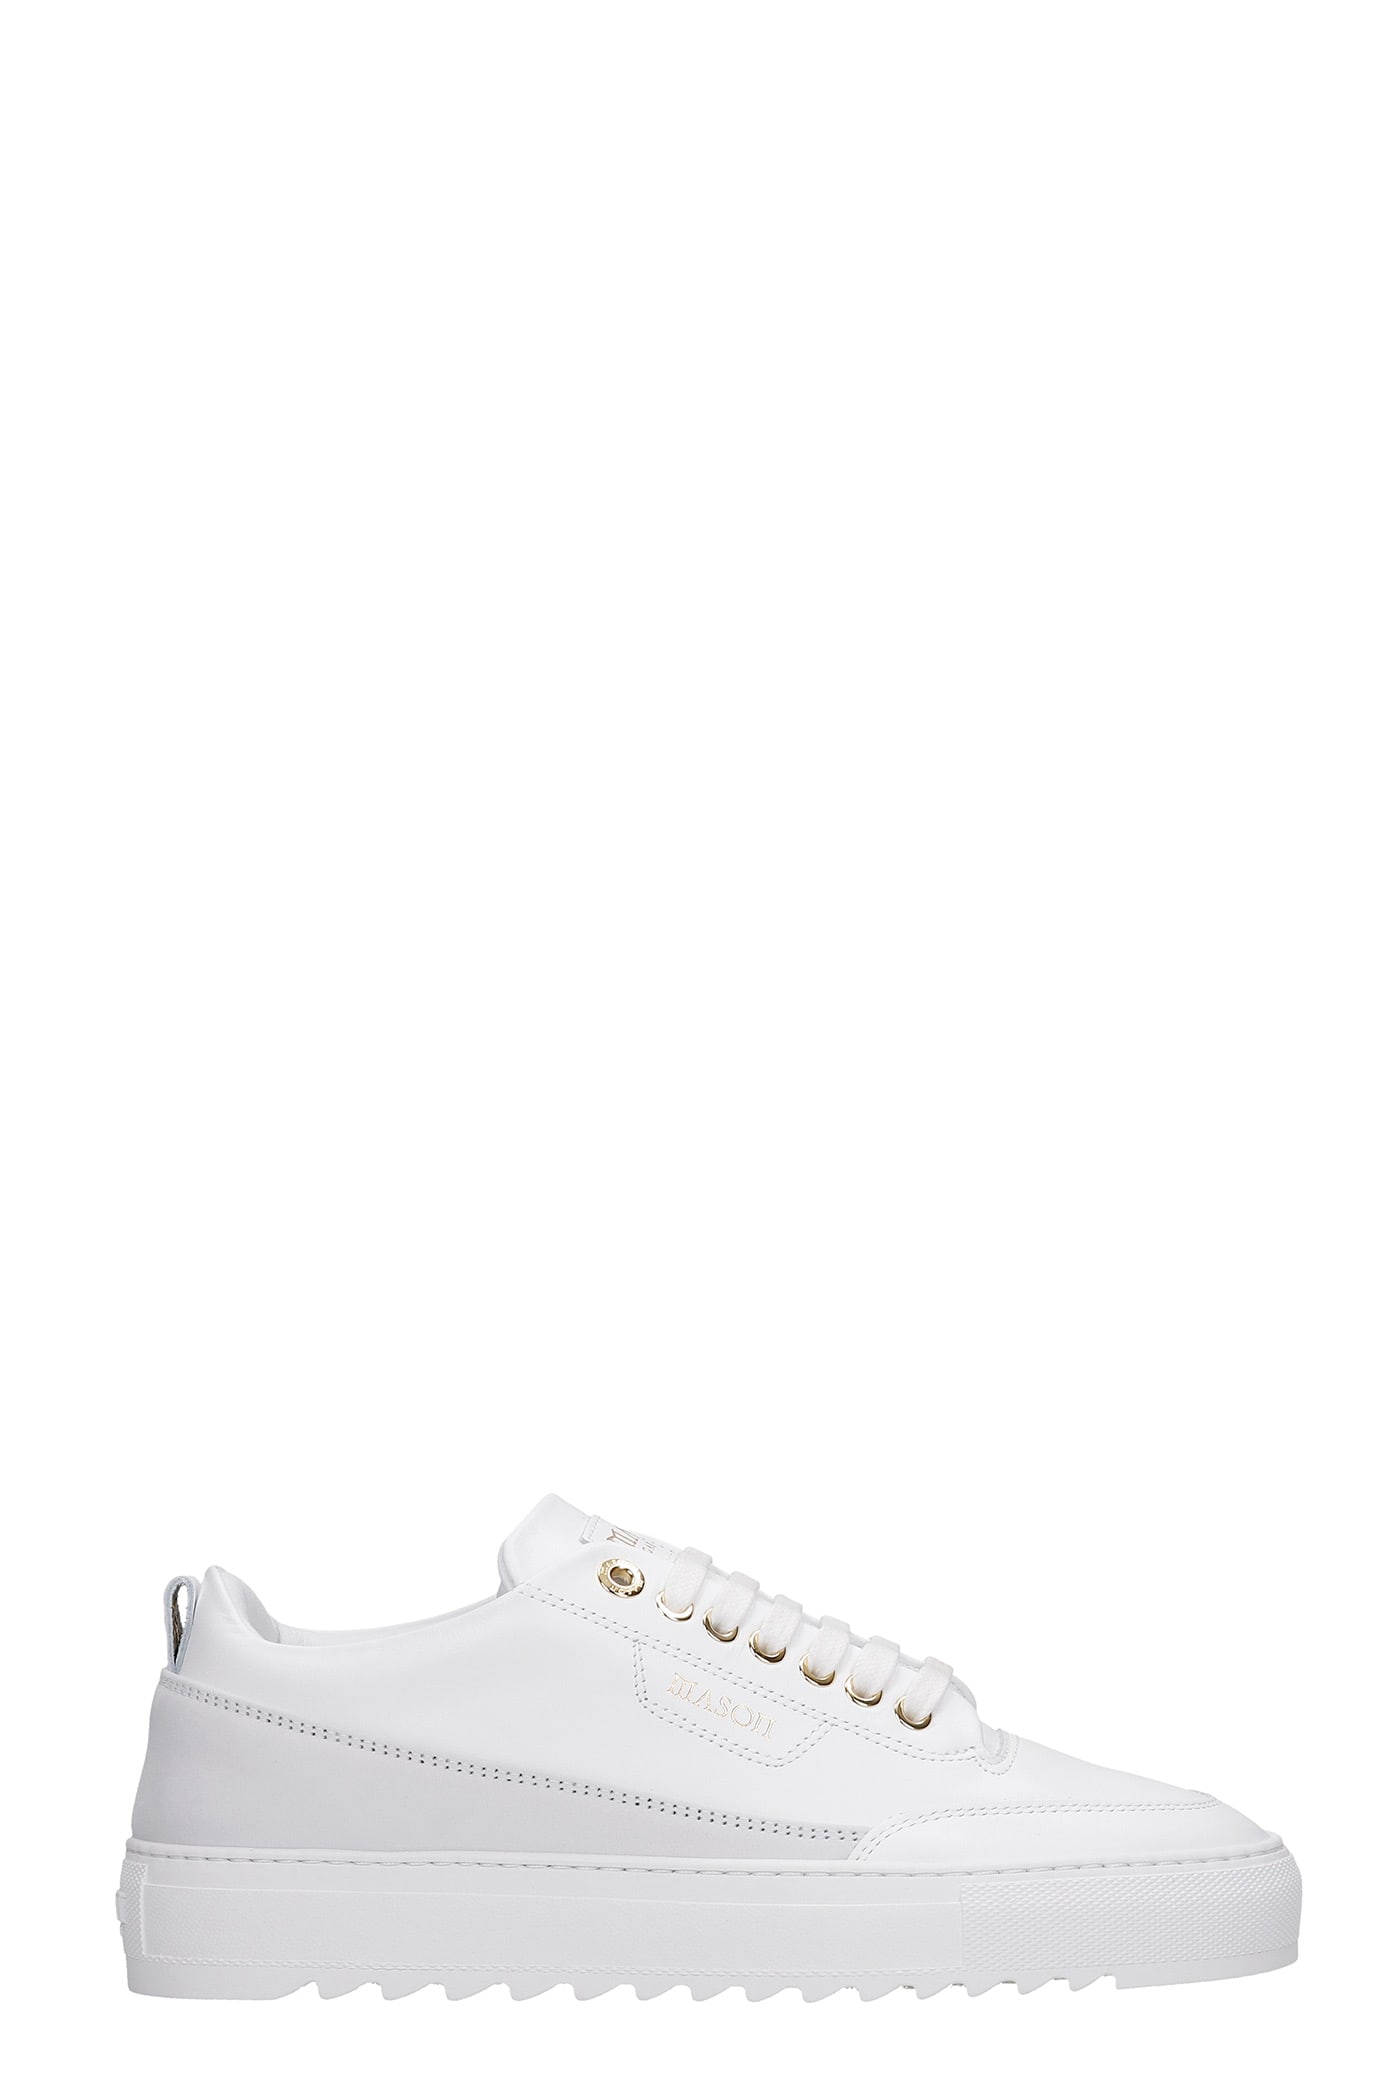 Mason Garments Torino Sneakers In White Leather